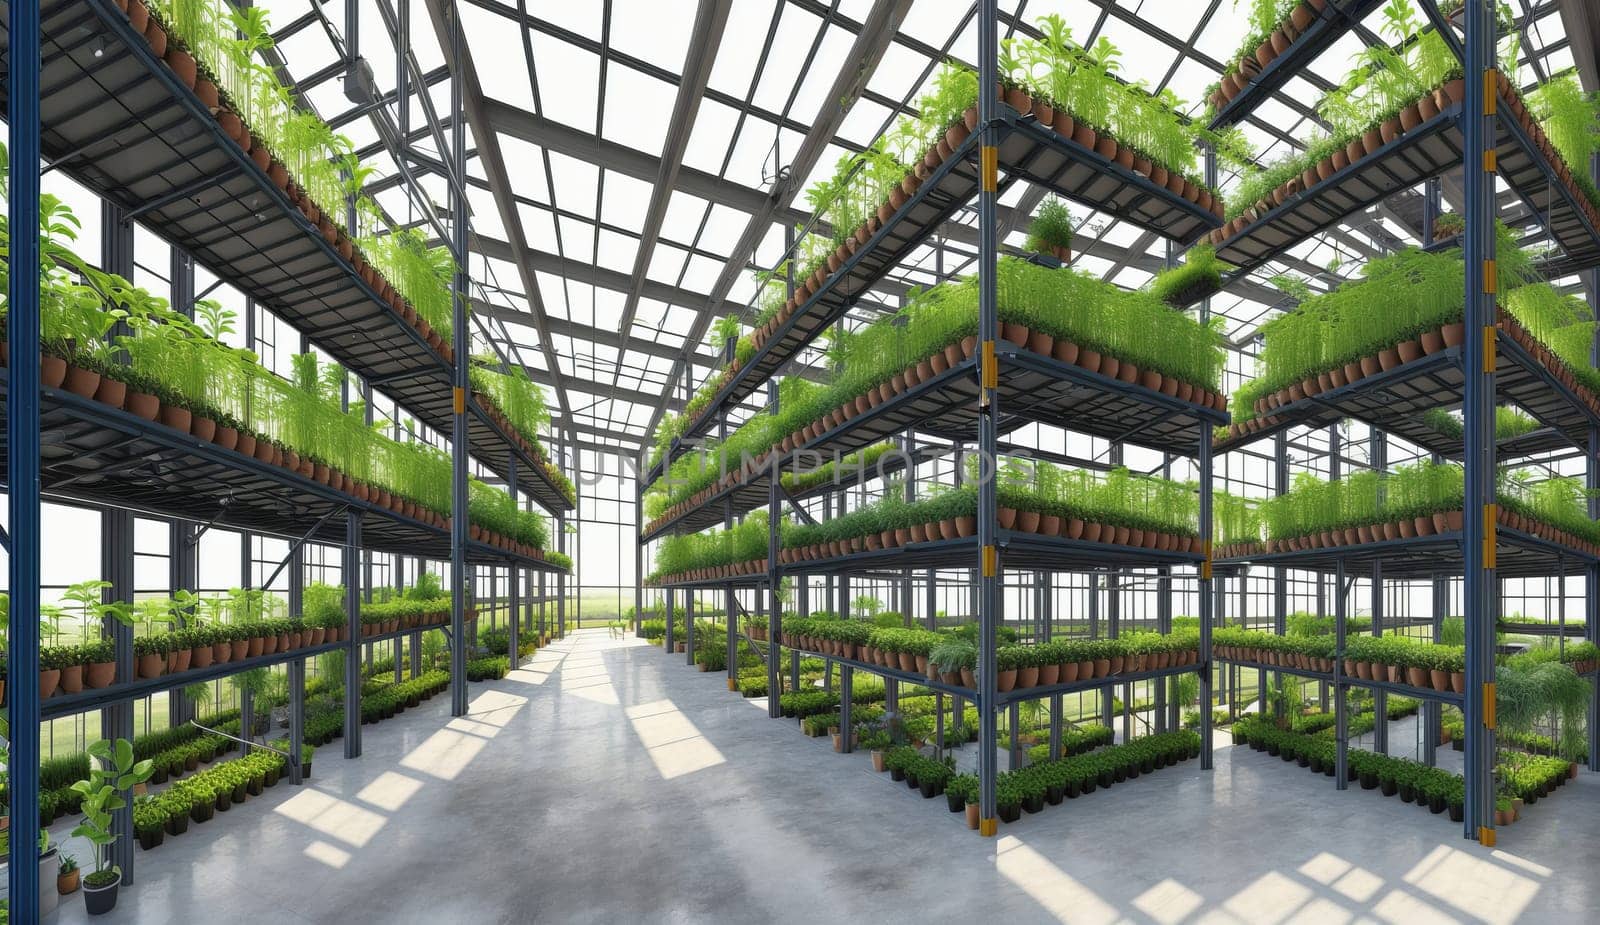 Building housing numerous shelves displaying various terrestrial plants by DCStudio